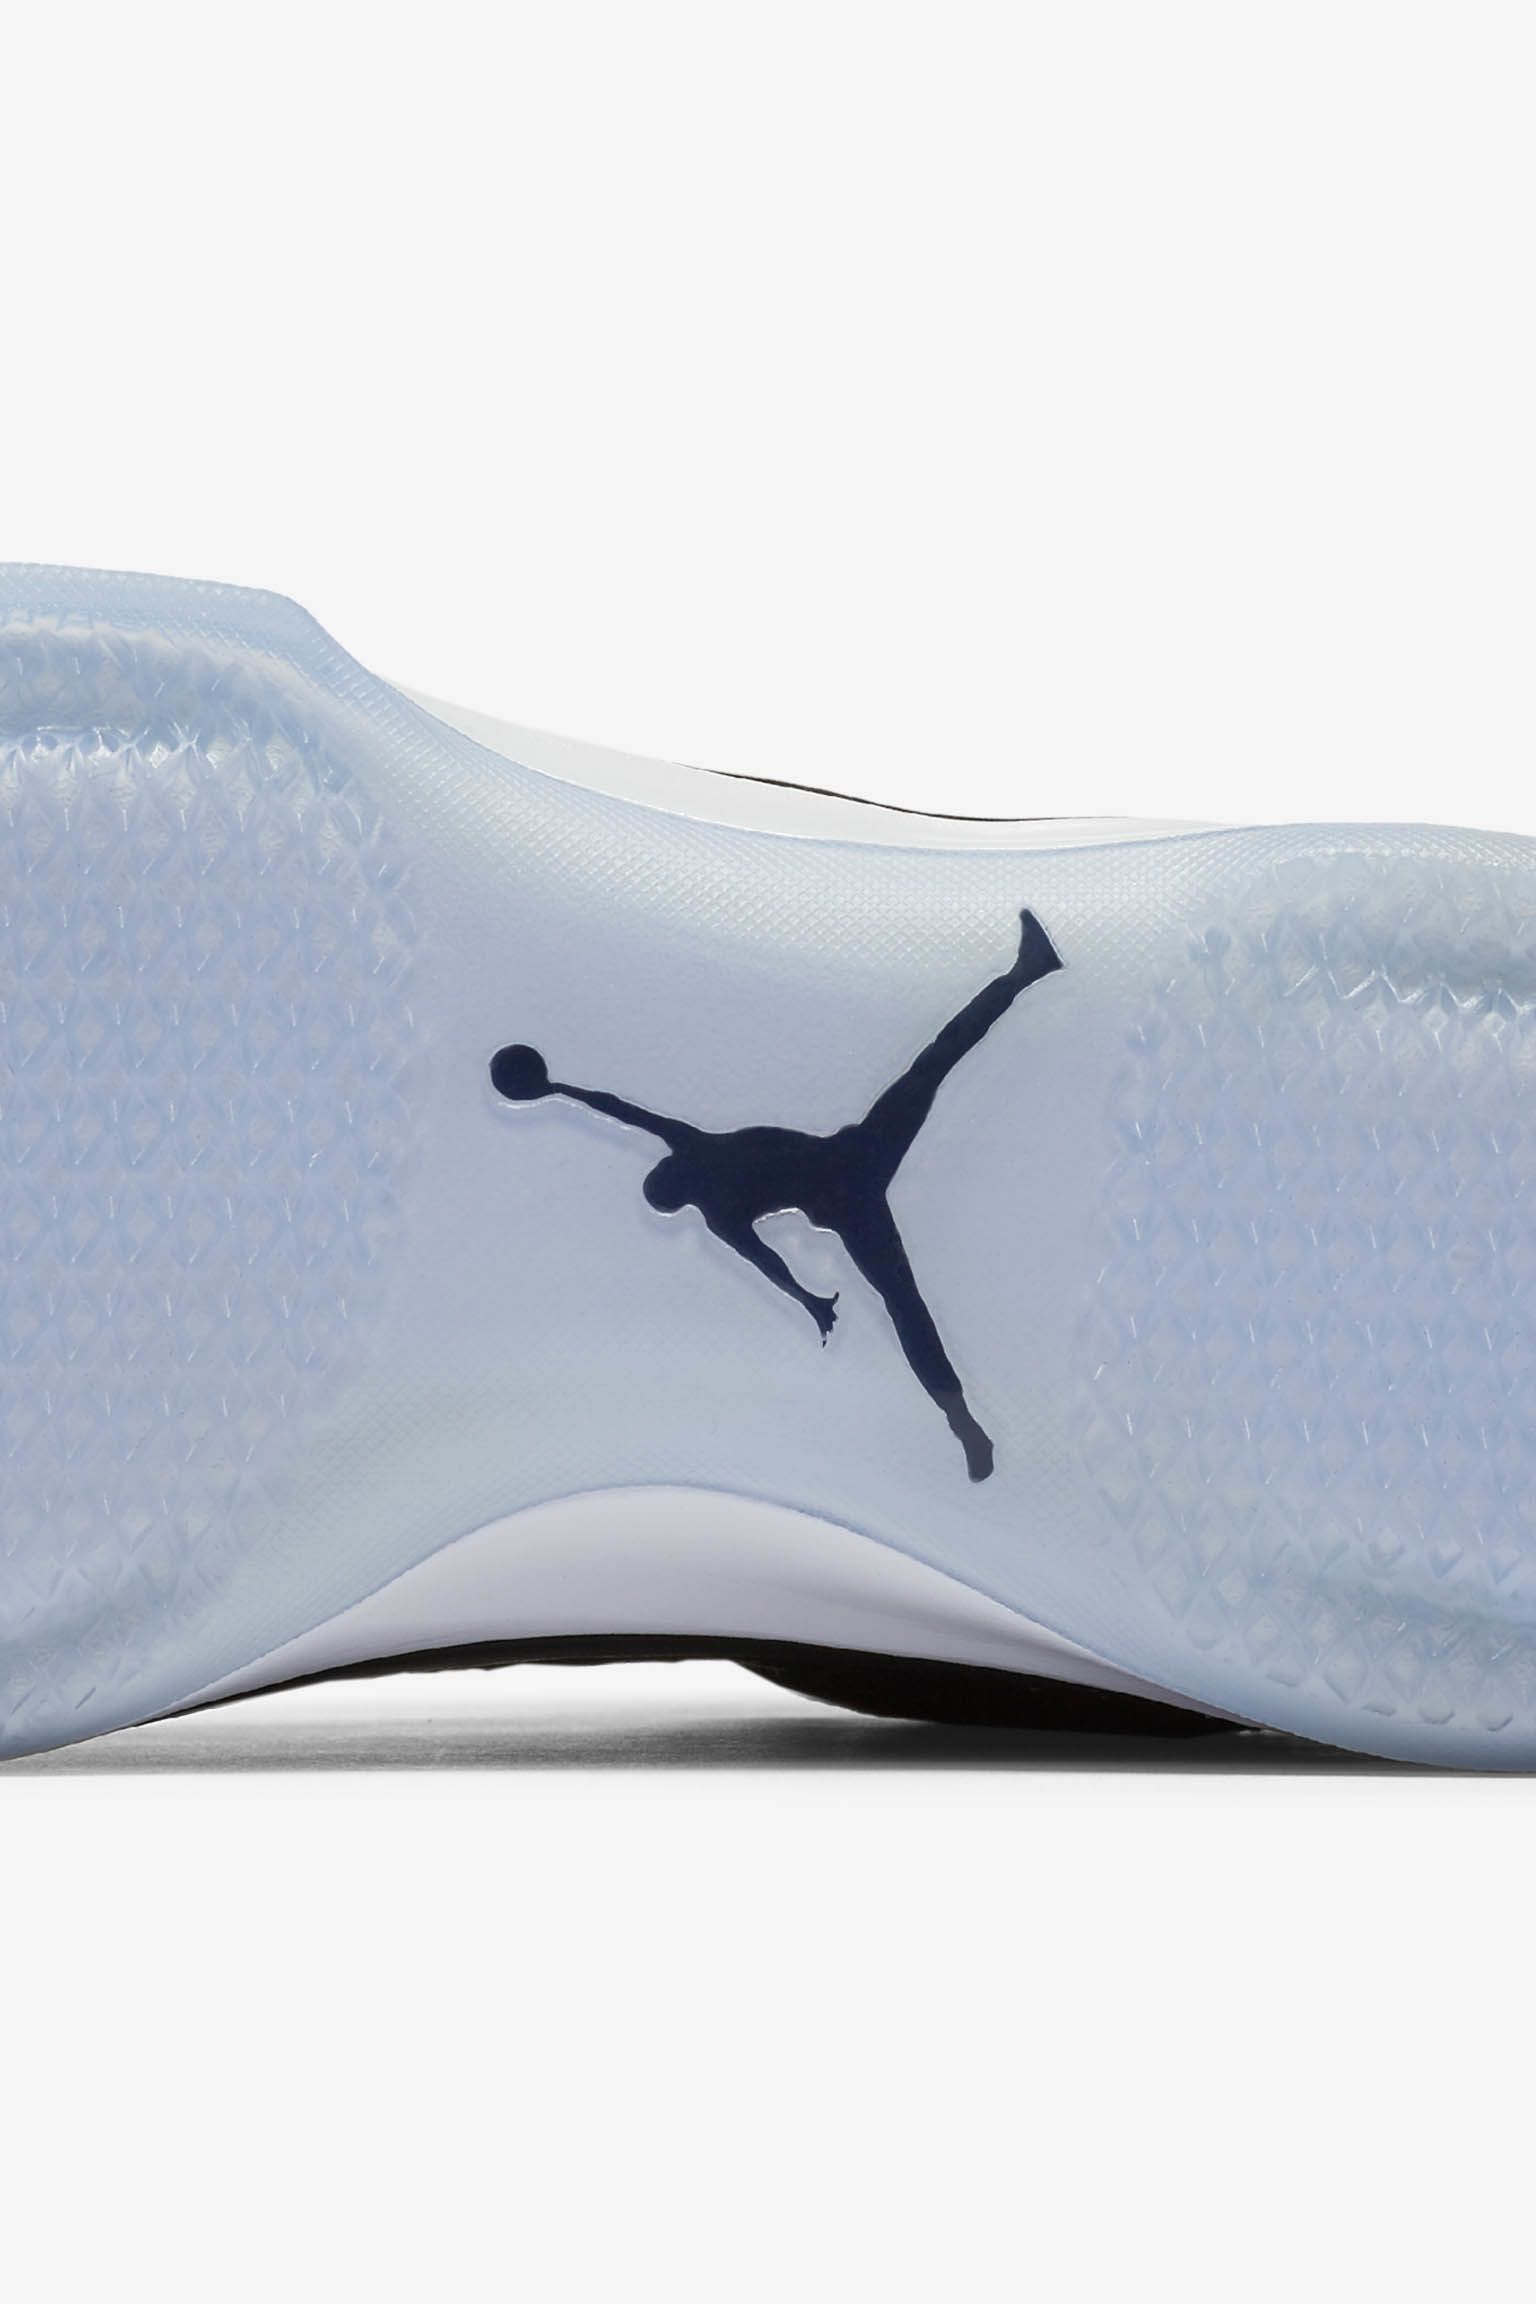 Exquisito Acostumbrados a Críticamente Air Jordan XXXI Low 'Black & White' Release Date. Nike SNKRS